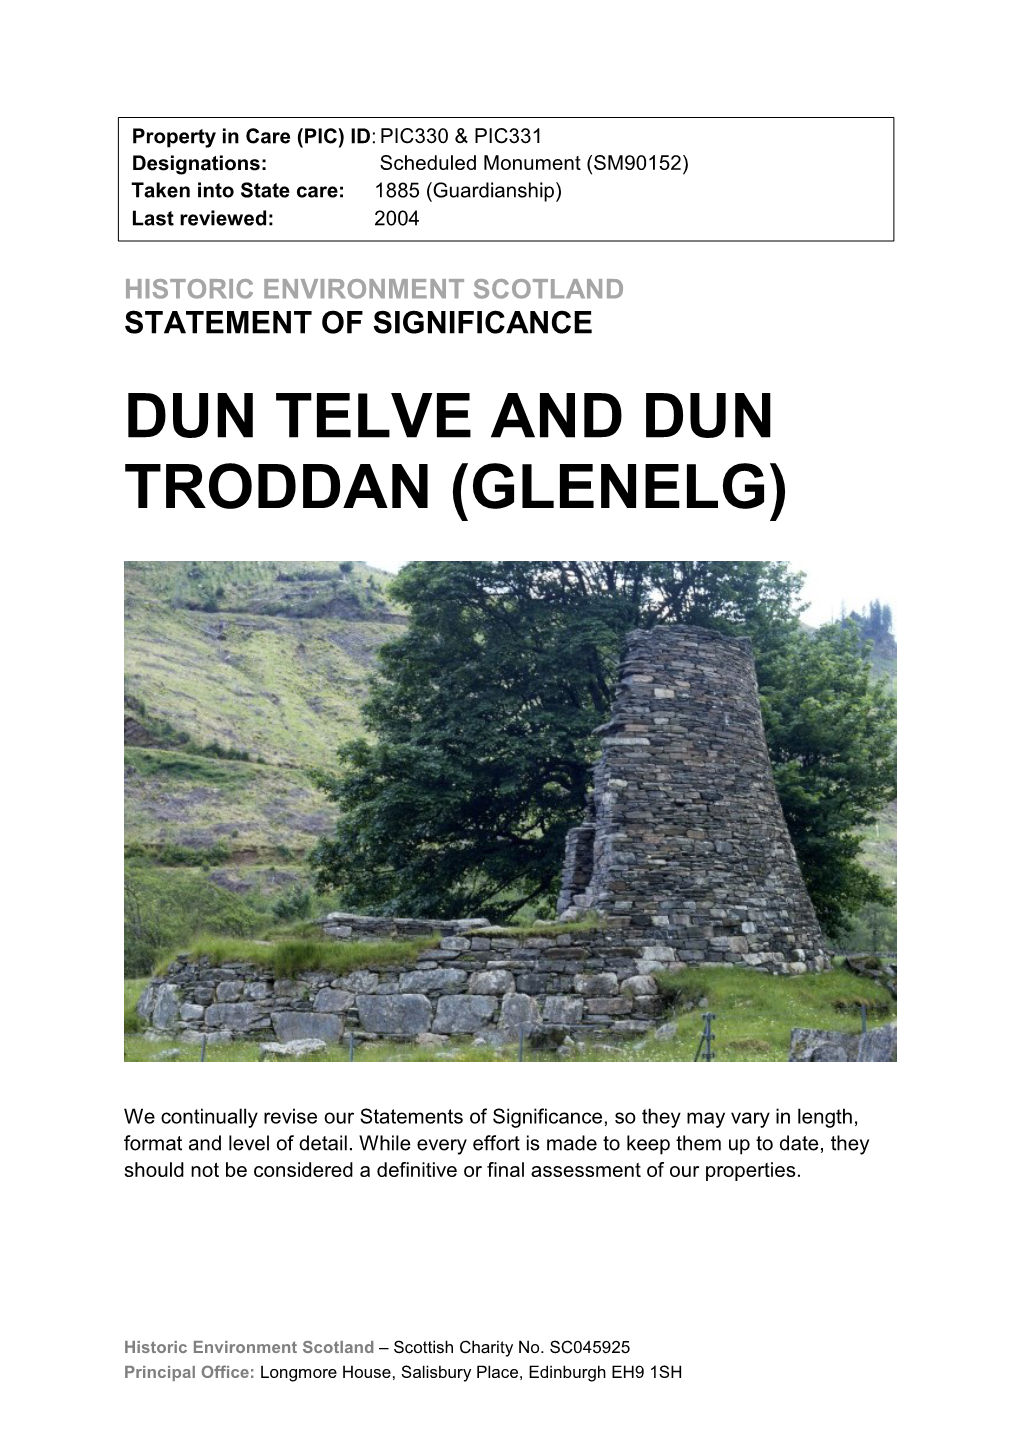 Dun Telve and Dun Troddan (Glenelg)